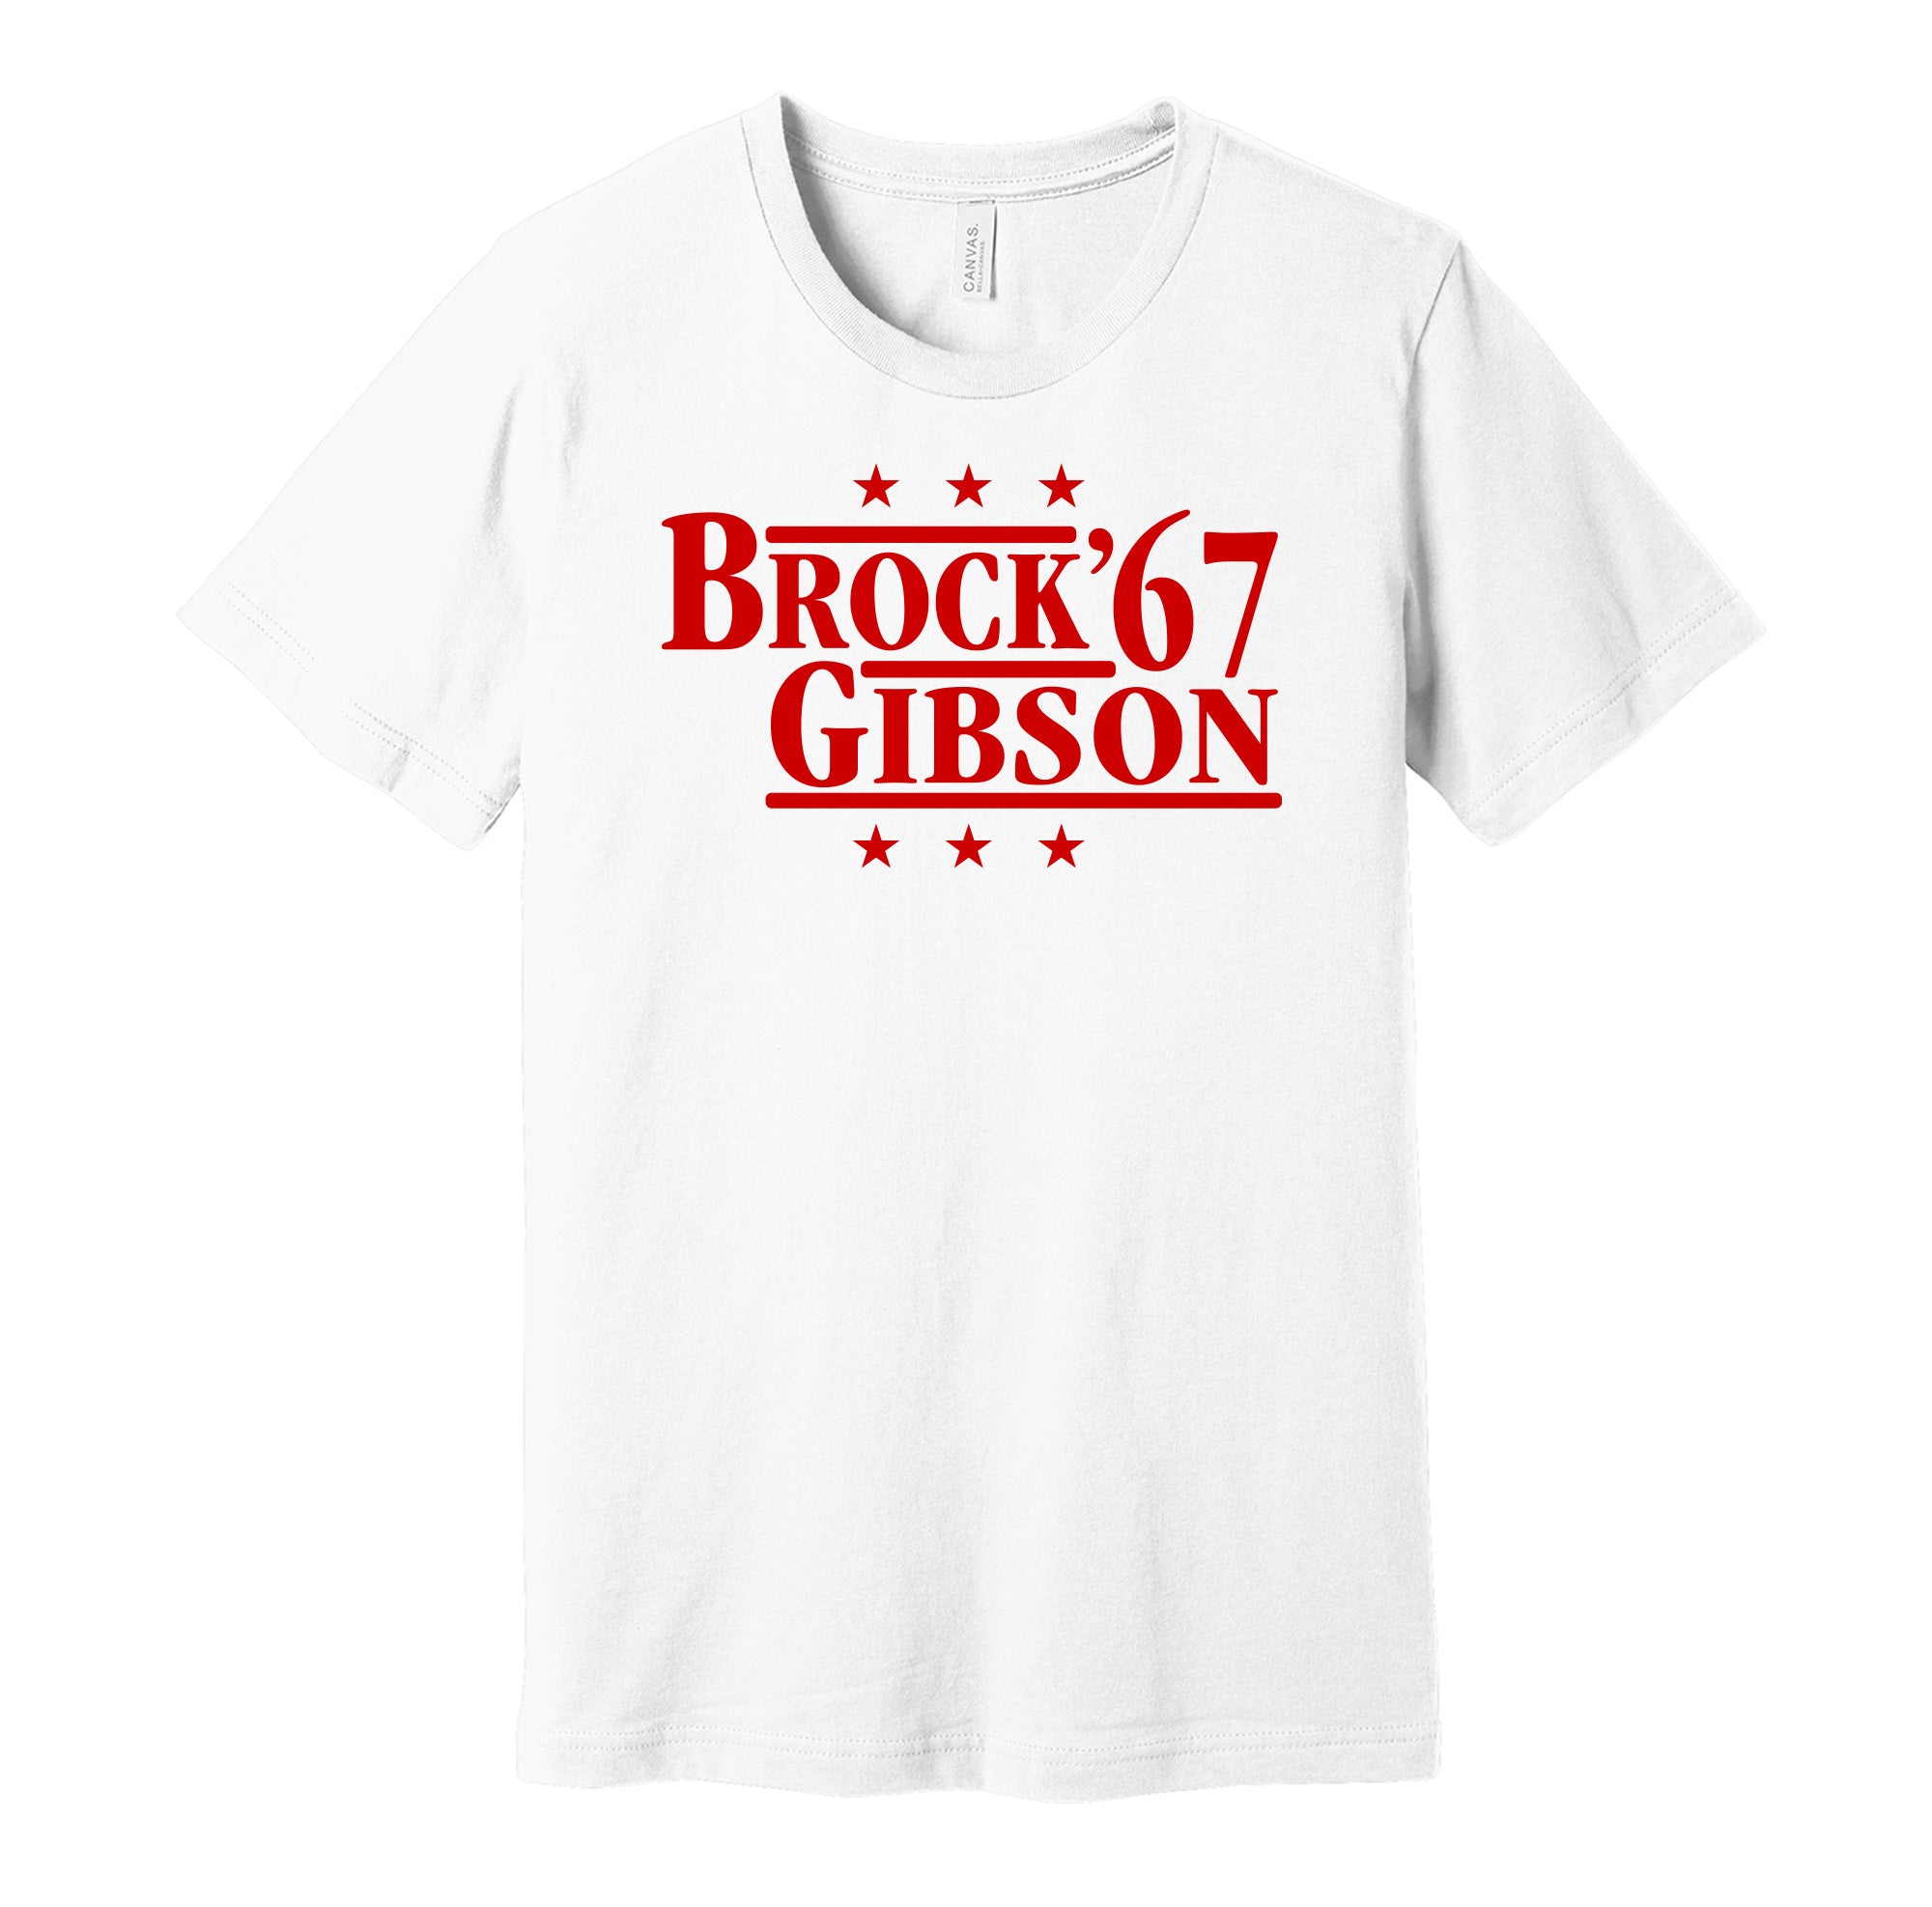 Brock & Gibson '67 - St. Louis Missouri Legends Political Campaign Parody T-Shirt - Hyper Than Hype Shirts L / White Shirt